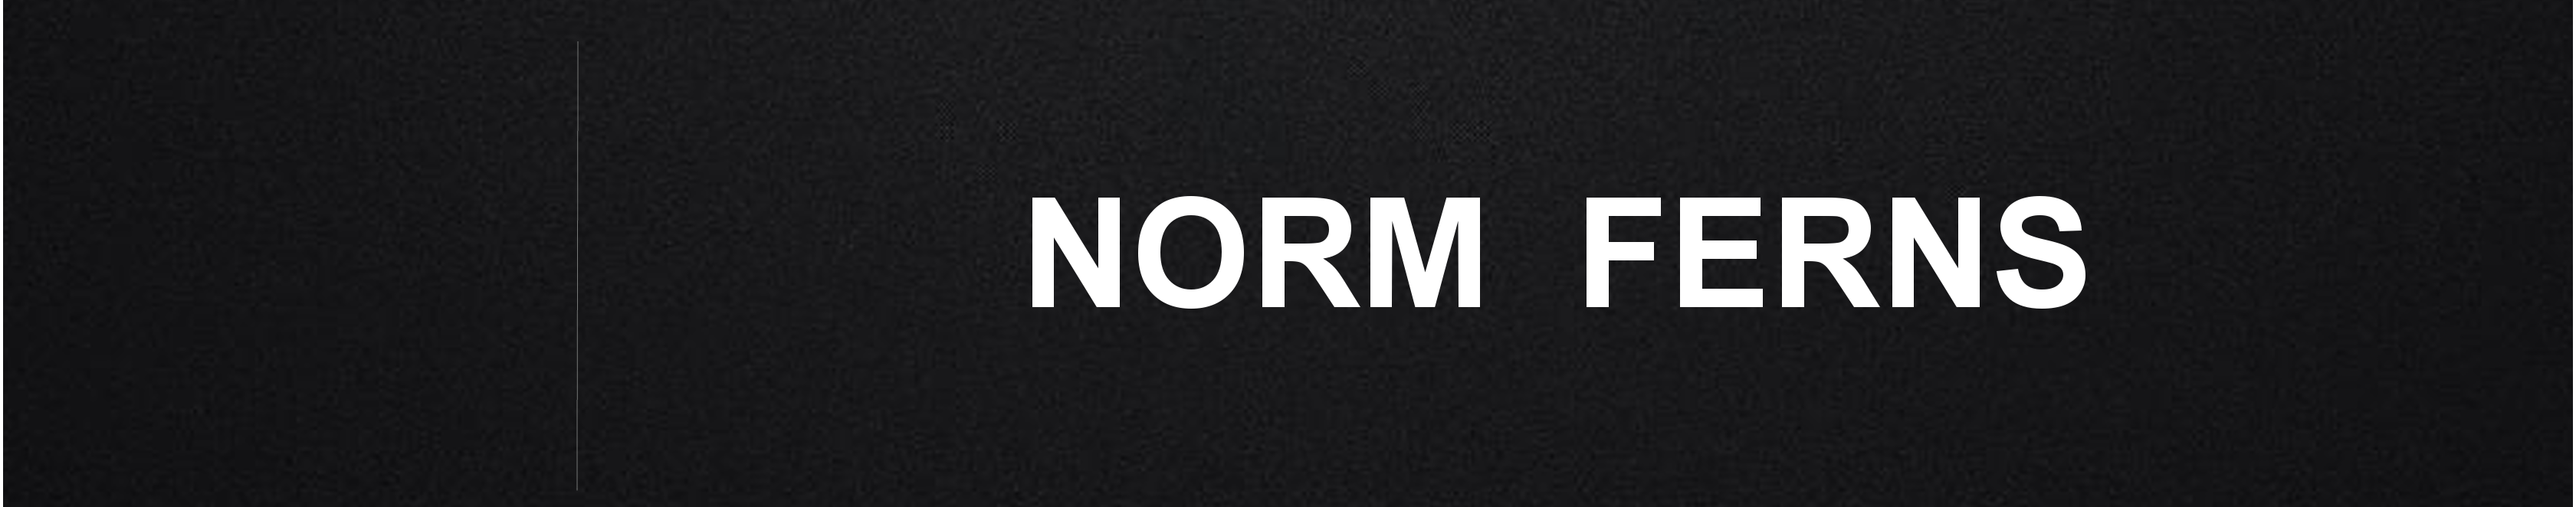 Norm Ferns Web Banner